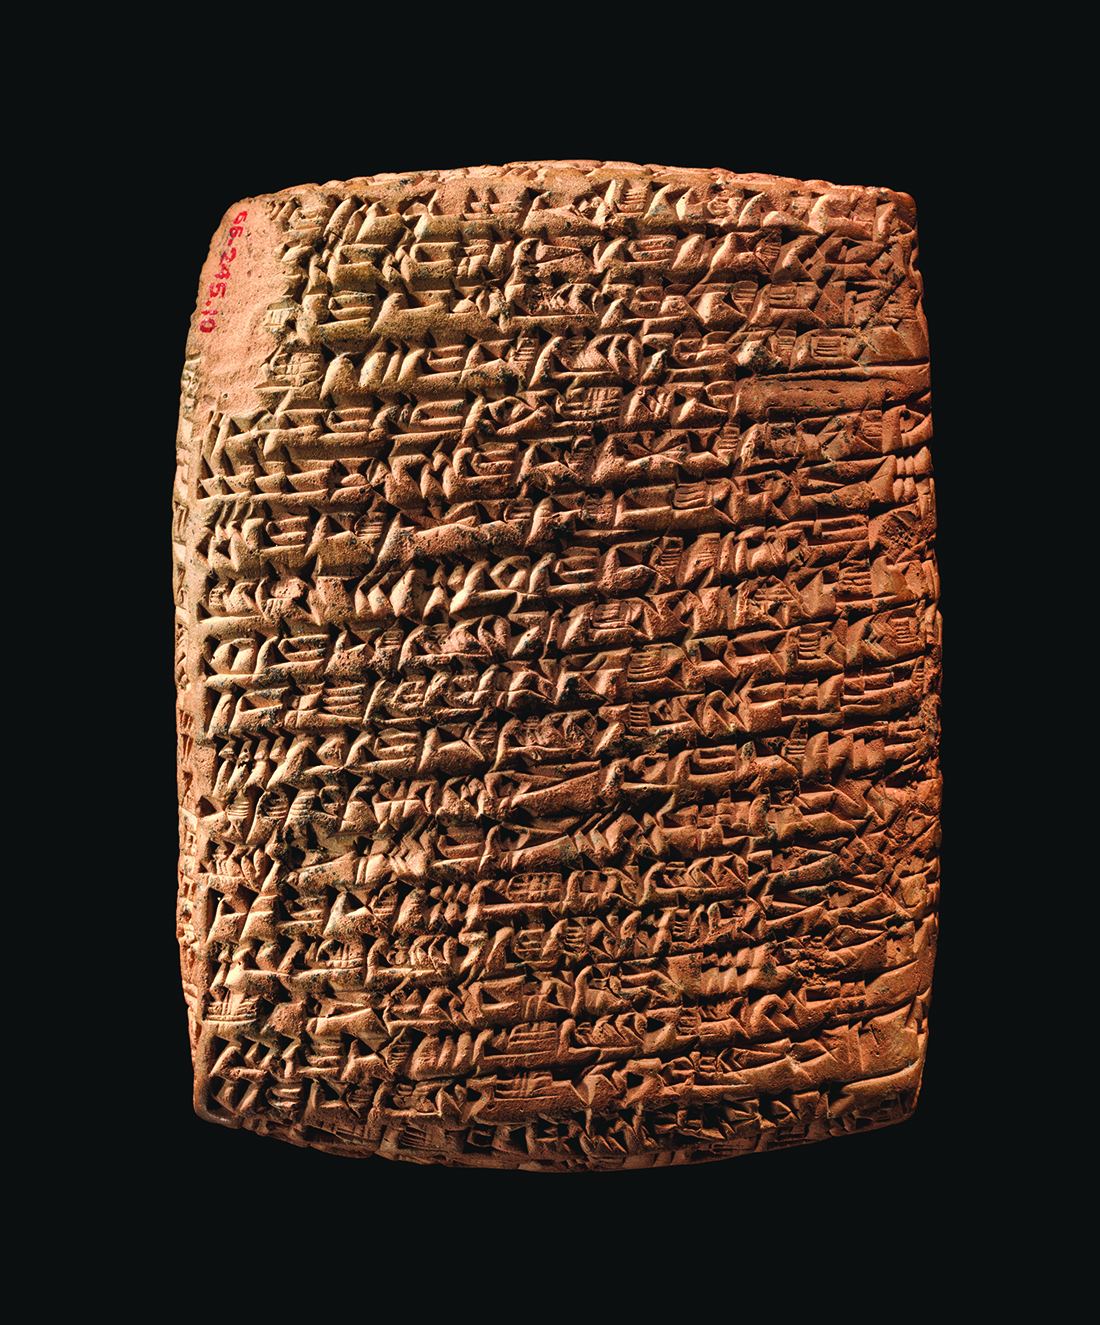 Assyrian Cuneiform Image public domain